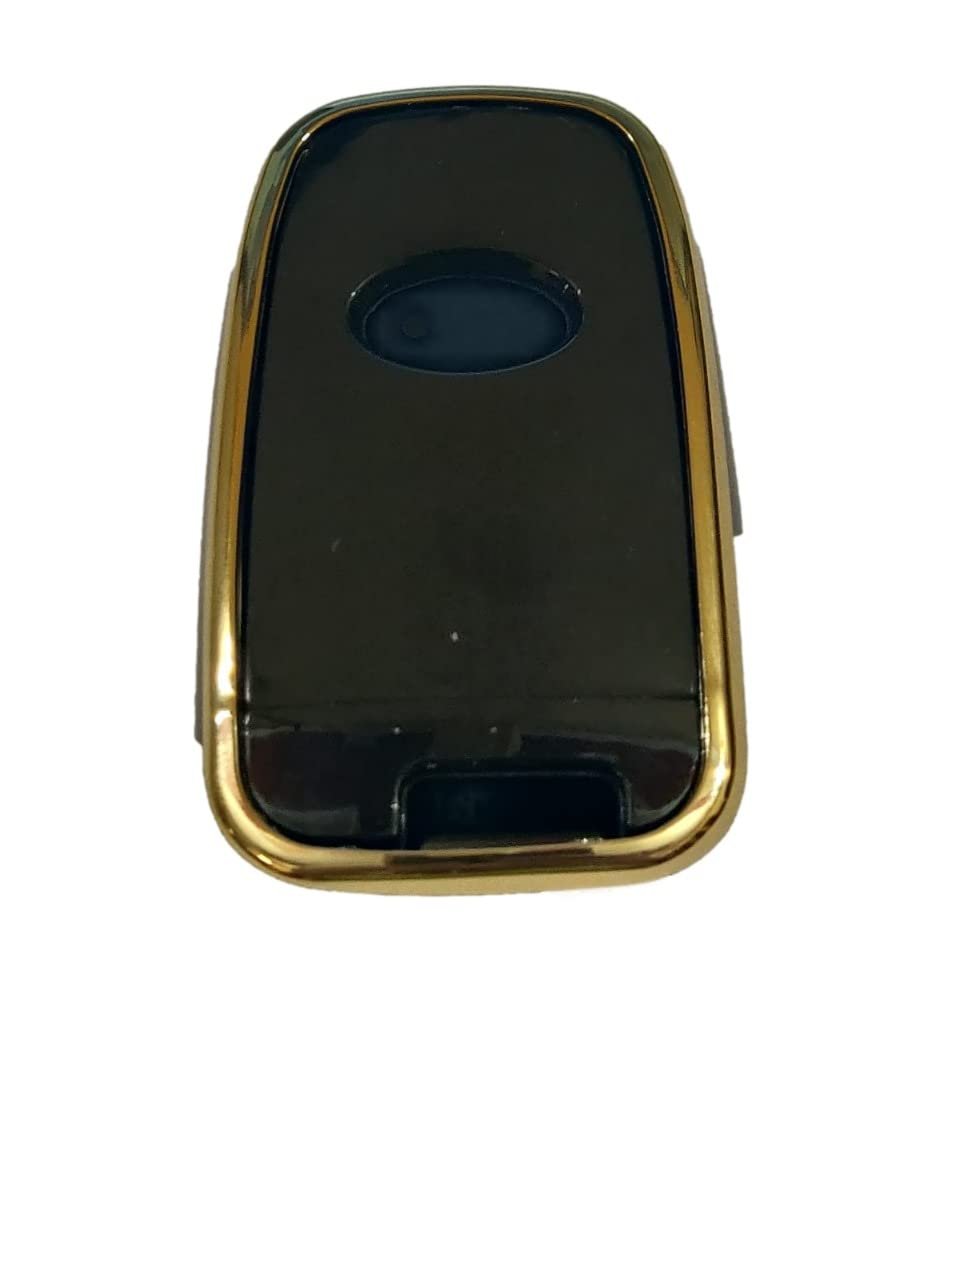 TPU Key Cover Compatible for Hyundai Verna Fluidic Old i20 Santafe Push Button Smart Key (Black)